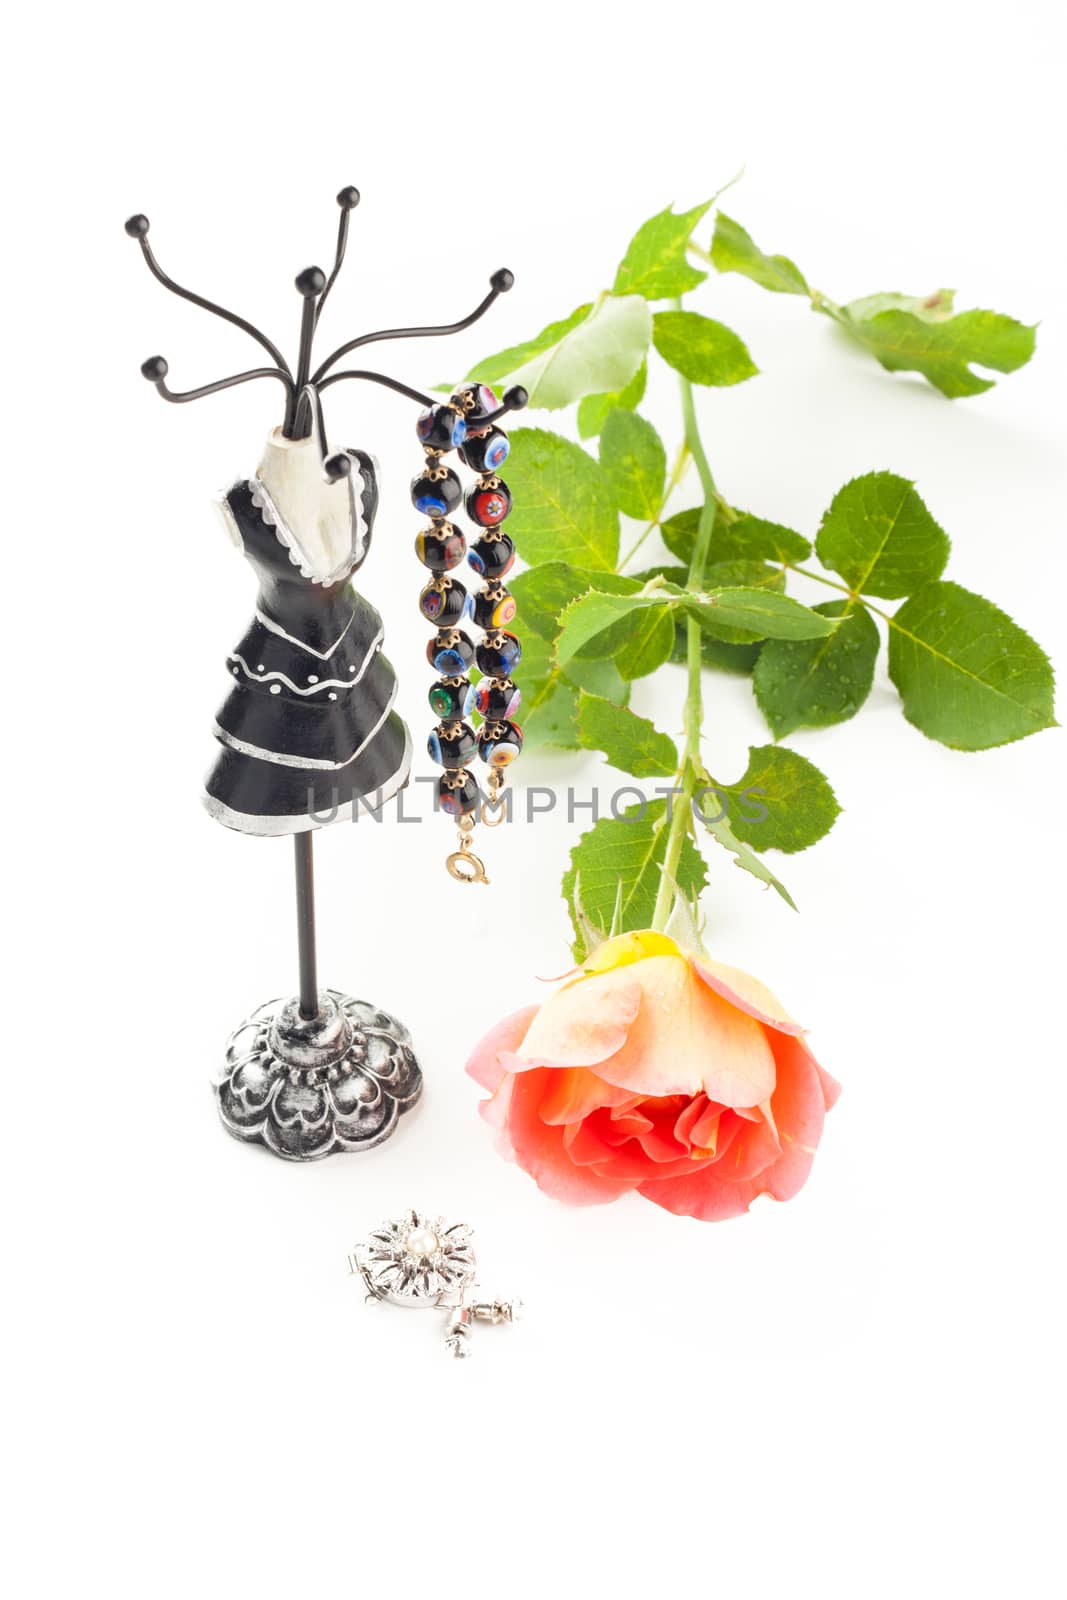 bracelet on a stylish jewelry holder and a rose